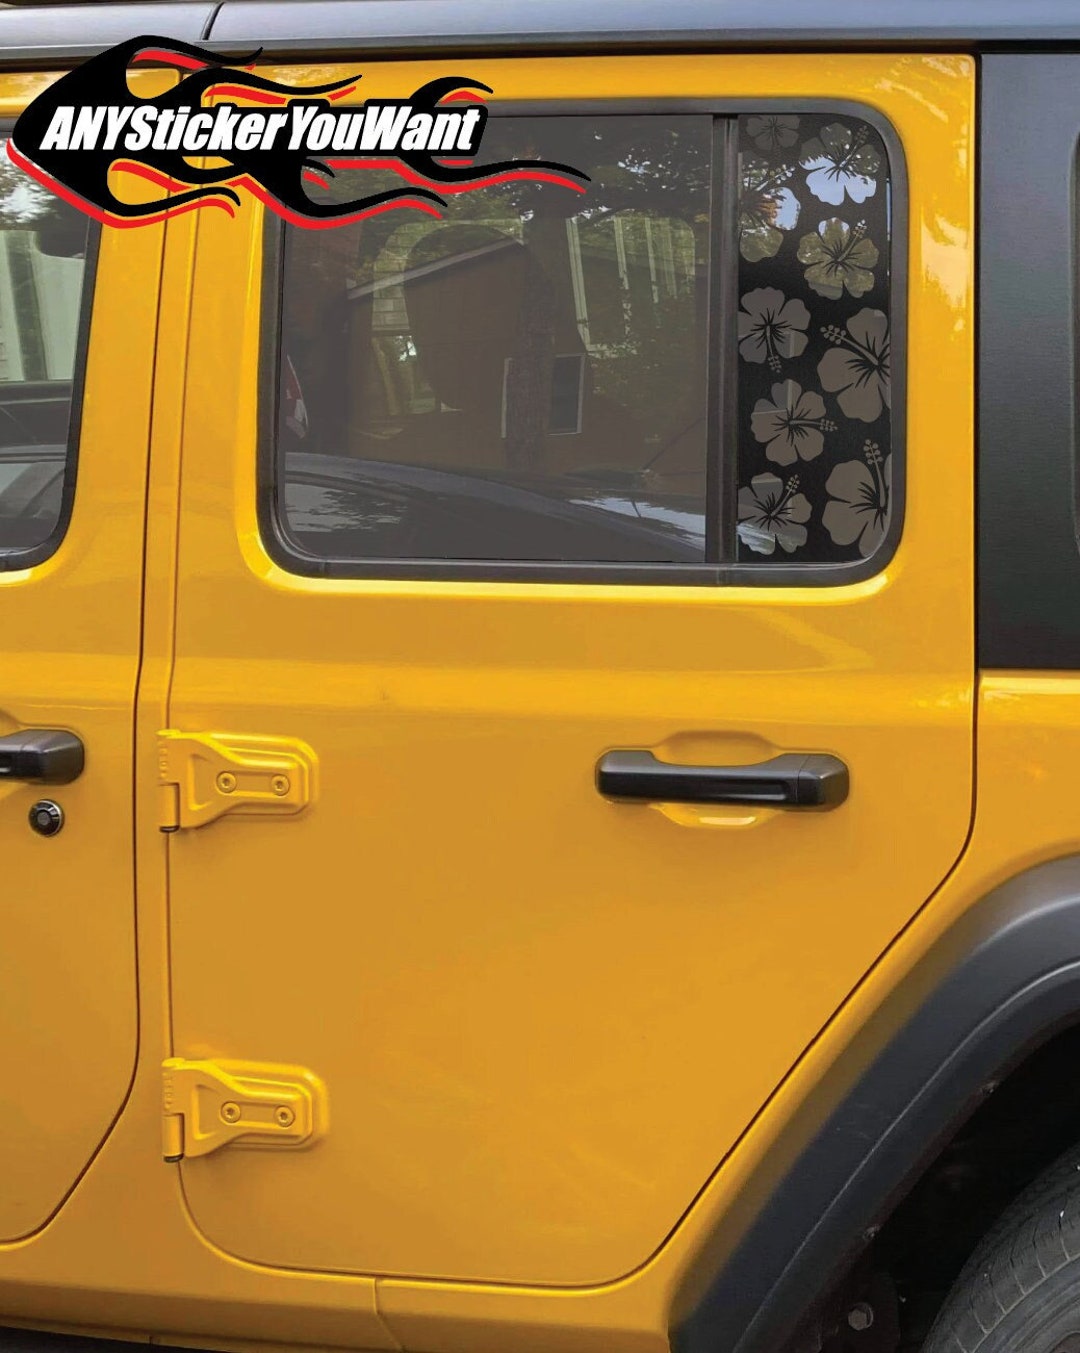 Jeep Wrangler JK Shredded Side Decals (Pair) : Vinyl Graphics Kit fits